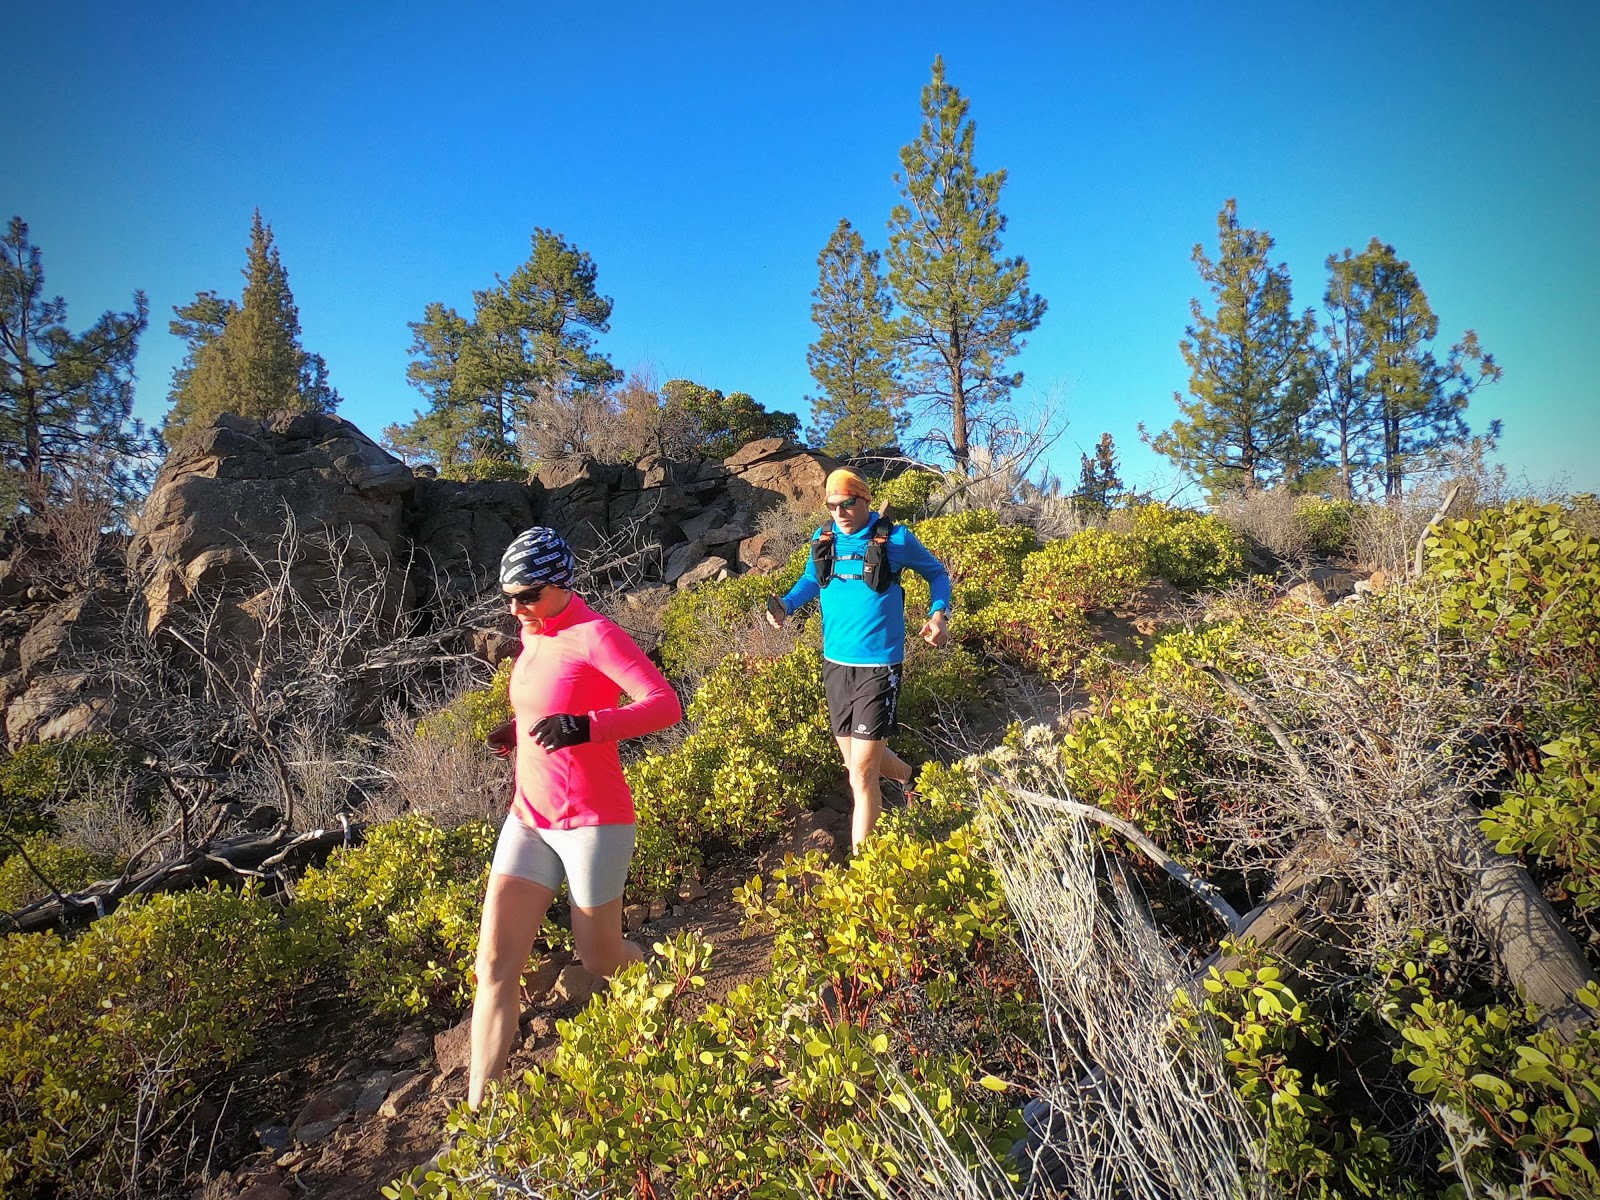 Superfeet Ambassadors David and Amy enjoy a run in the mountains